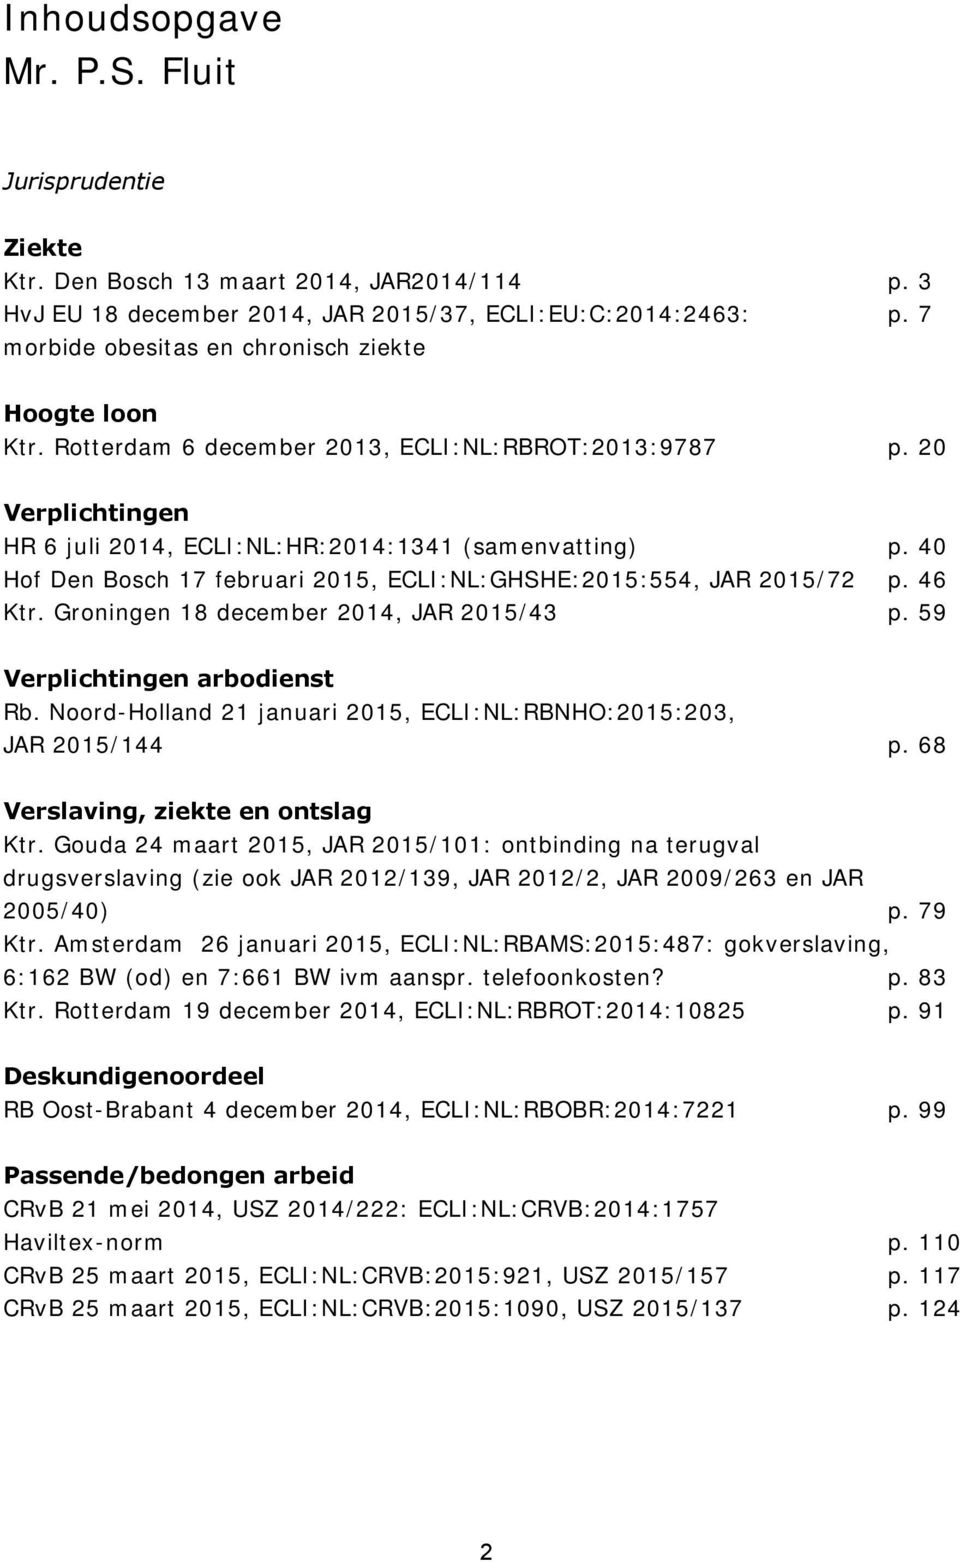 40 Hof Den Bosch 17 februari 2015, ECLI:NL:GHSHE:2015:554, JAR 2015/72 p. 46 Ktr. Groningen 18 december 2014, JAR 2015/43 p. 59 Verplichtingen arbodienst Rb.